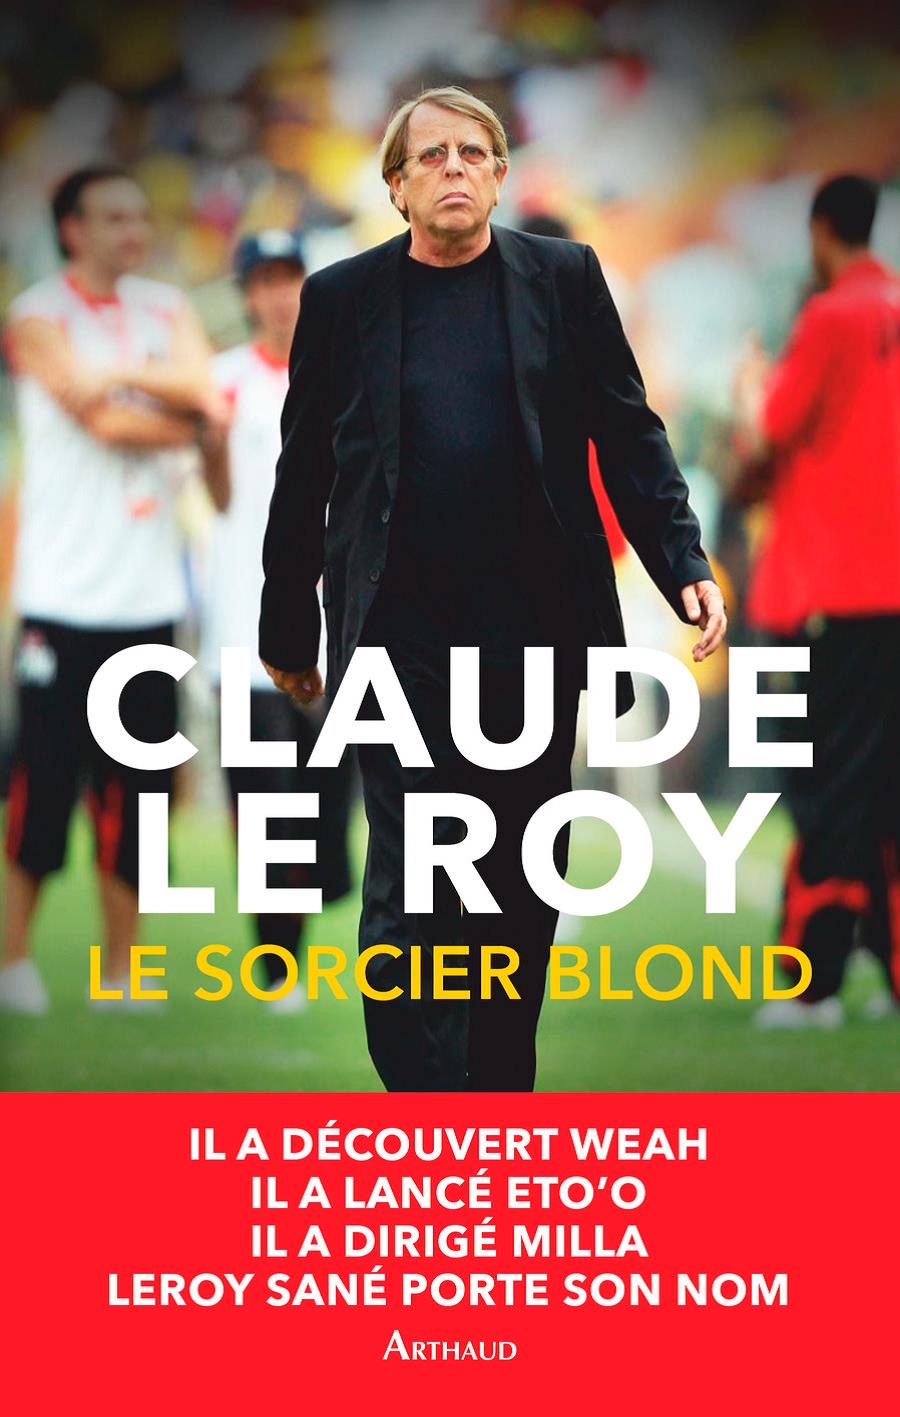 You are currently viewing Littérature : « Claude Leroy le sorcier blond » flambe les rayons des librairies en France